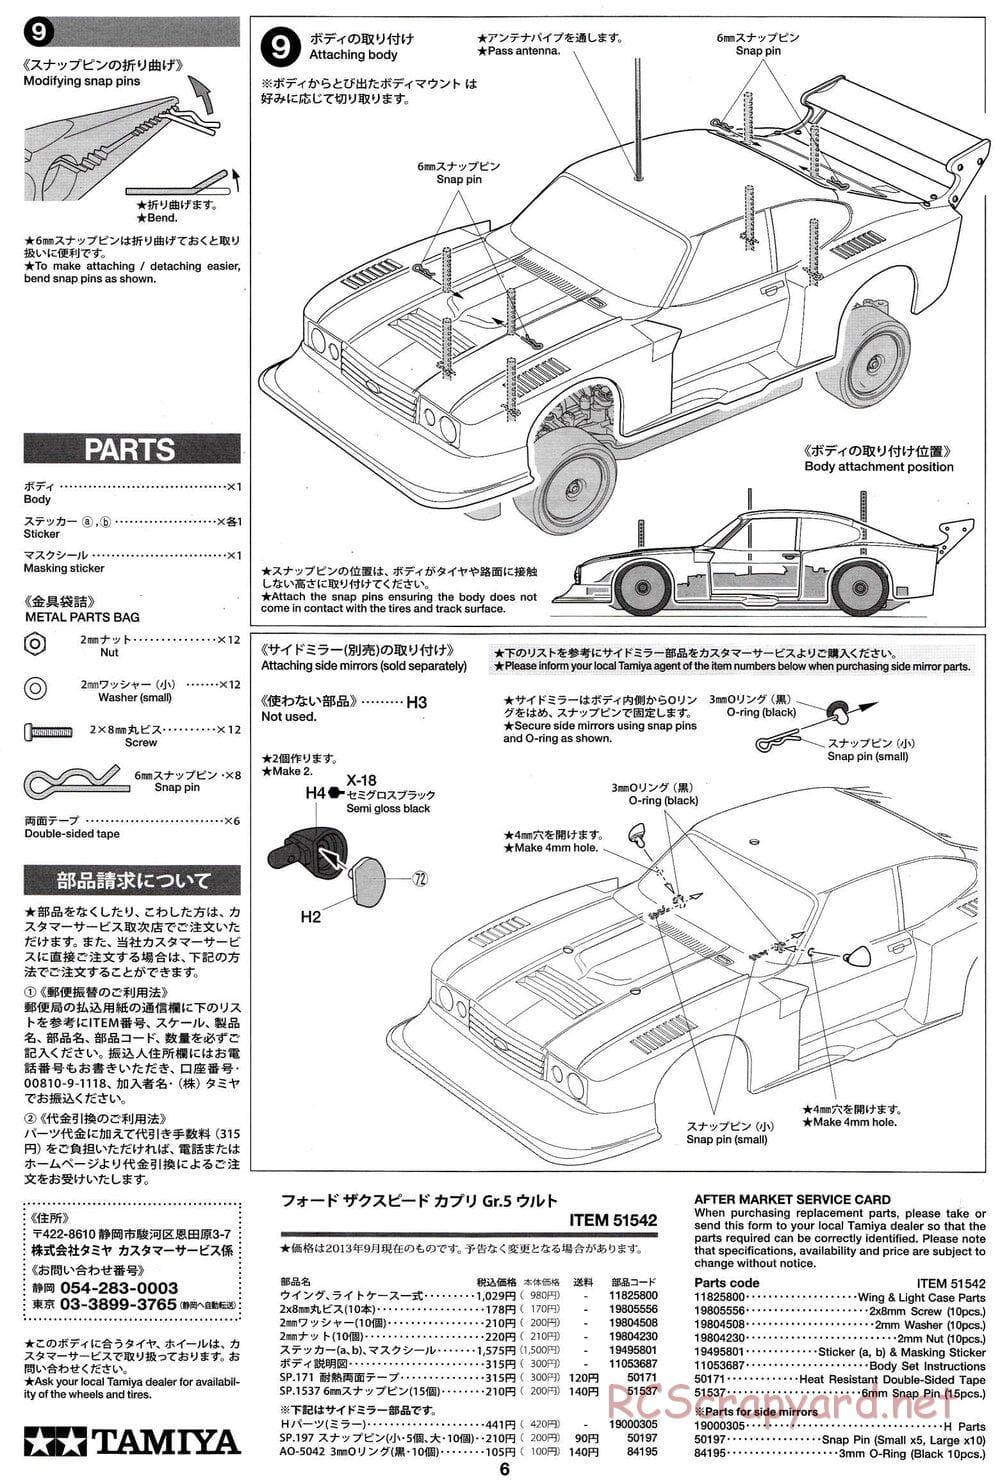 Tamiya - Ford Zakspeed Turbo Capri Gr.5 Wurth - TT-02 Chassis - Body Manual - Page 6